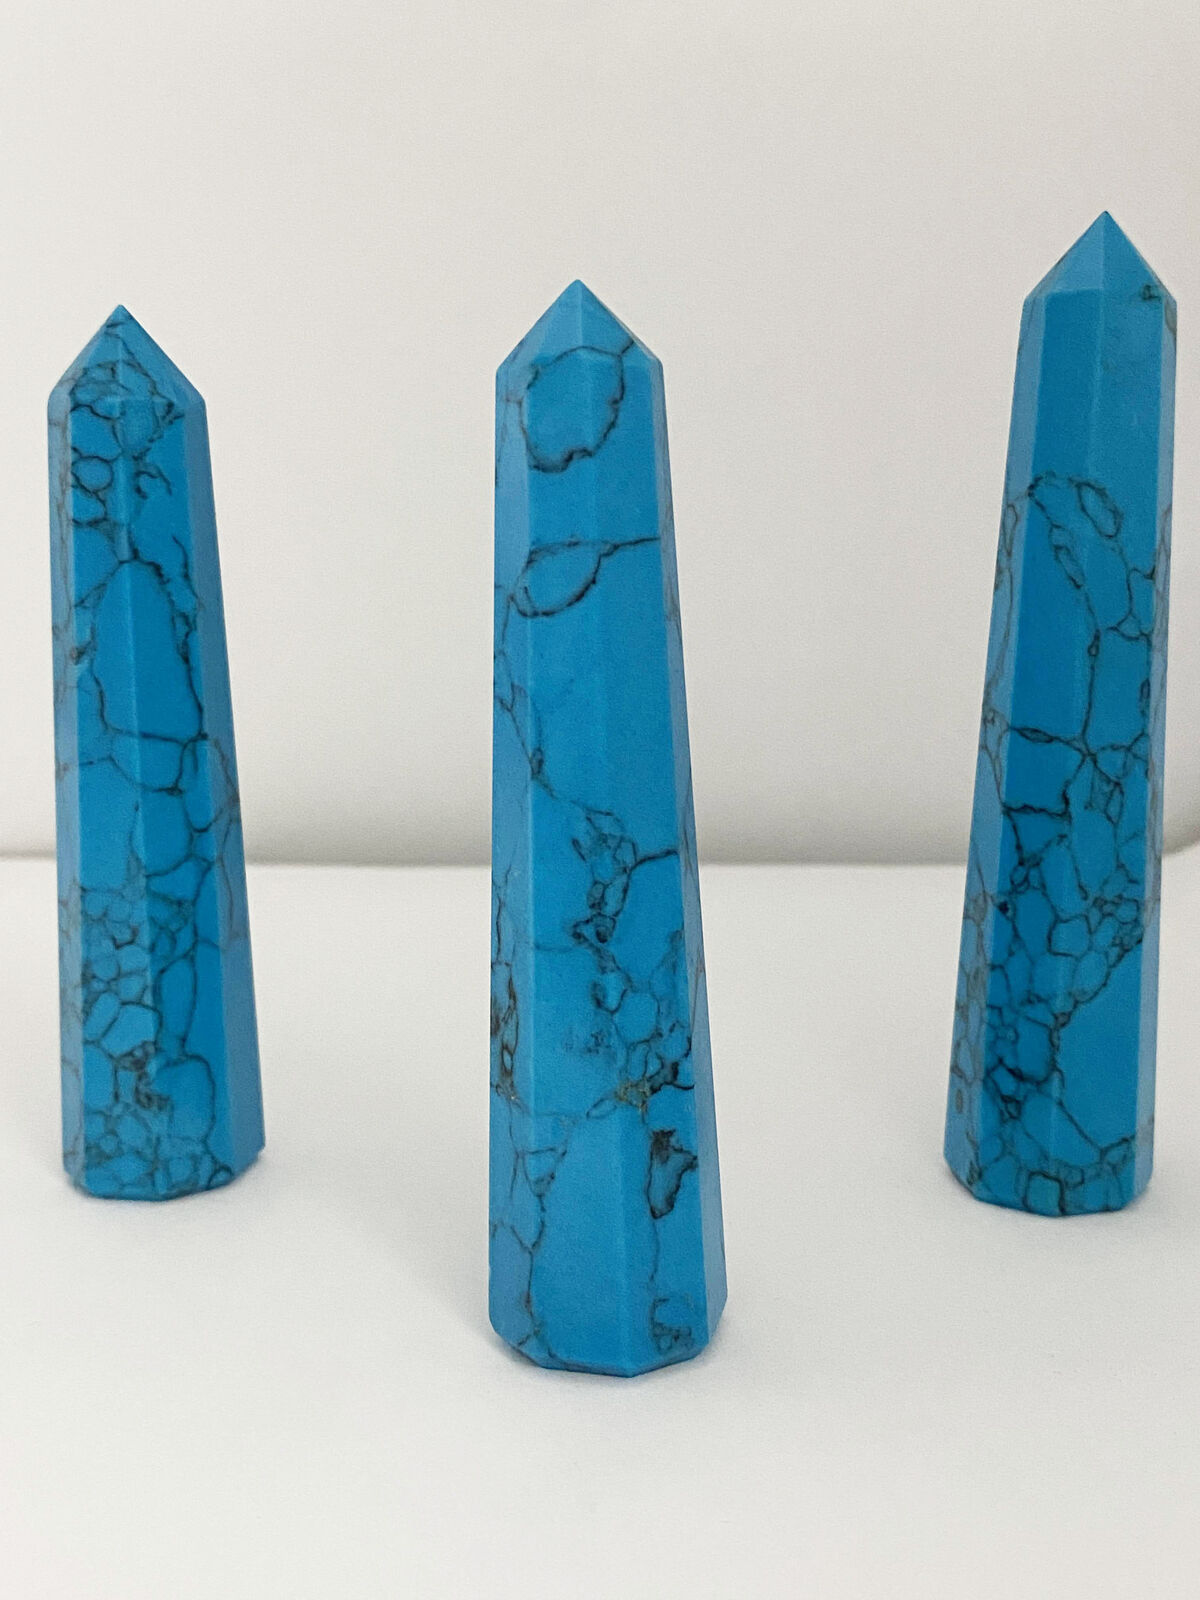 Jumbo Synthetic Turquoise / Blue Howlite Obelisk Tower Point